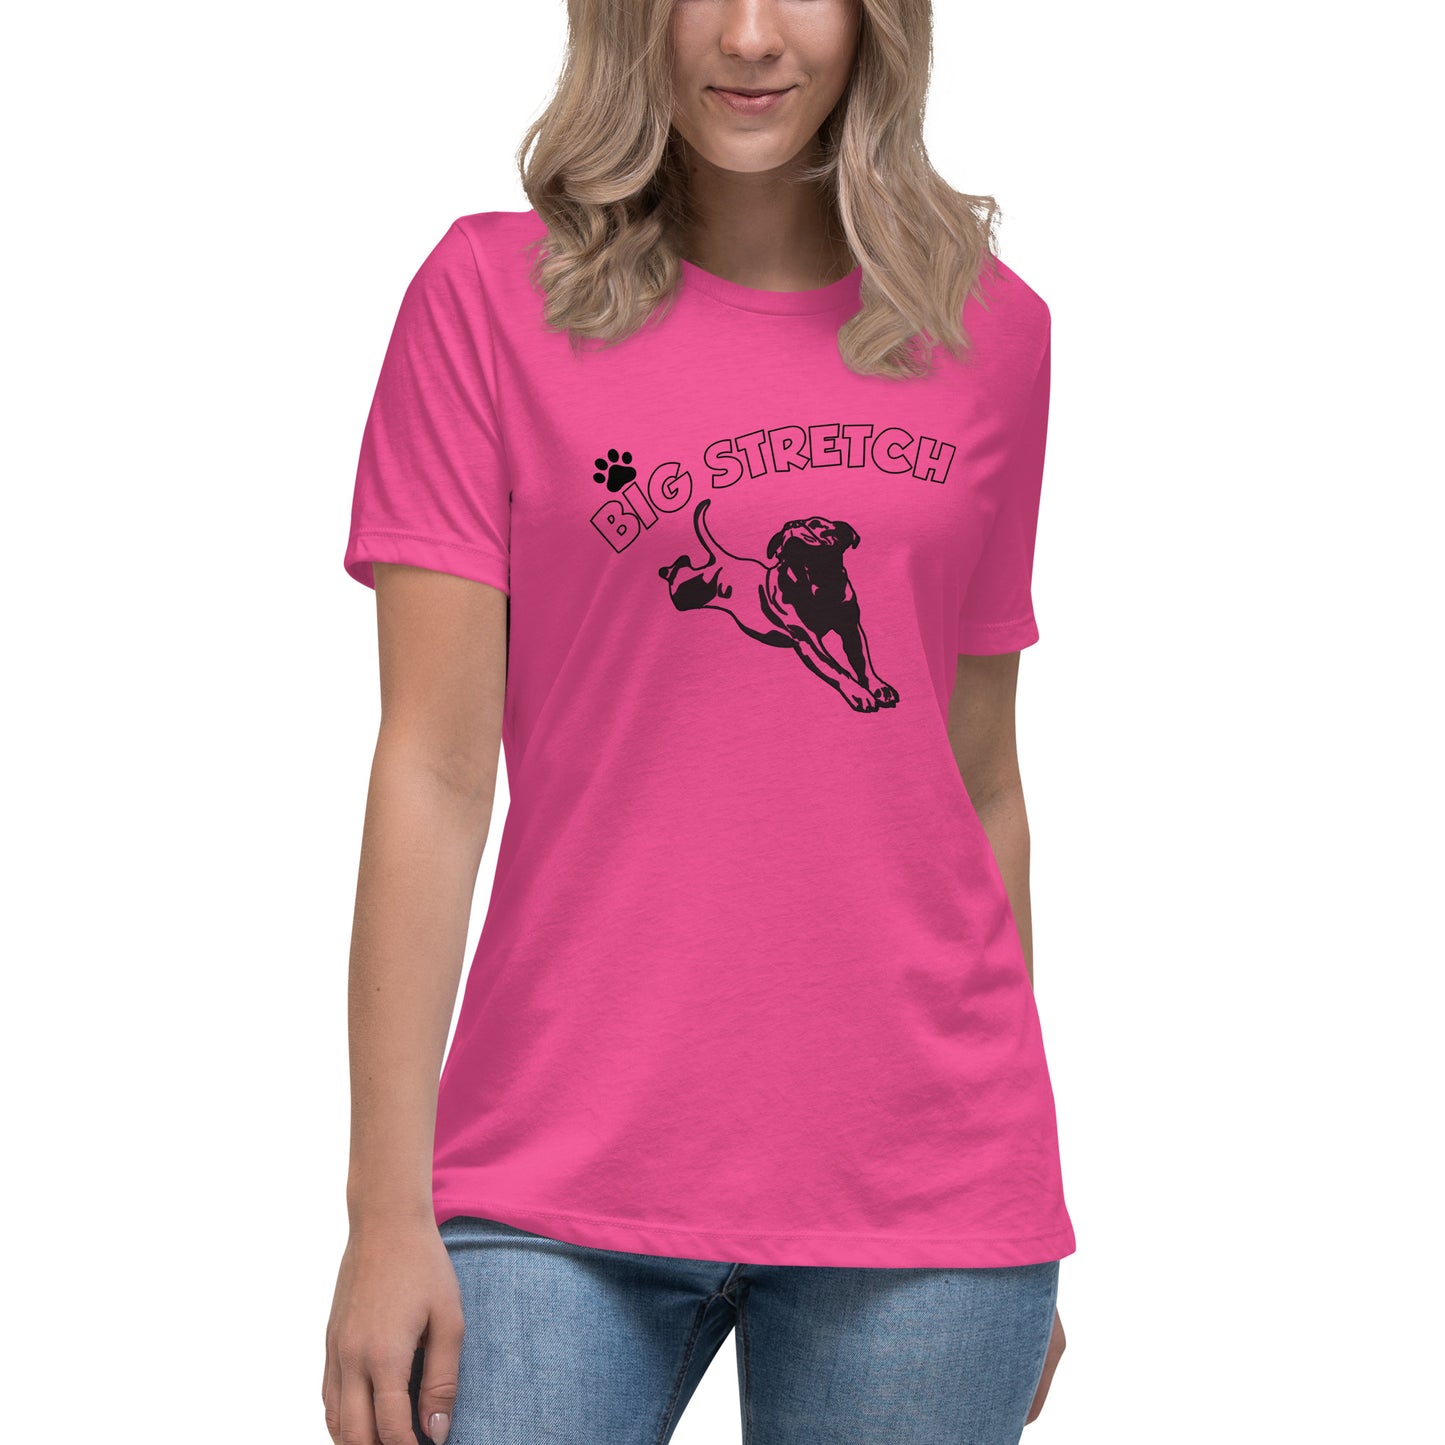 Big Stretch Dog Women's Relaxed T-Shirt